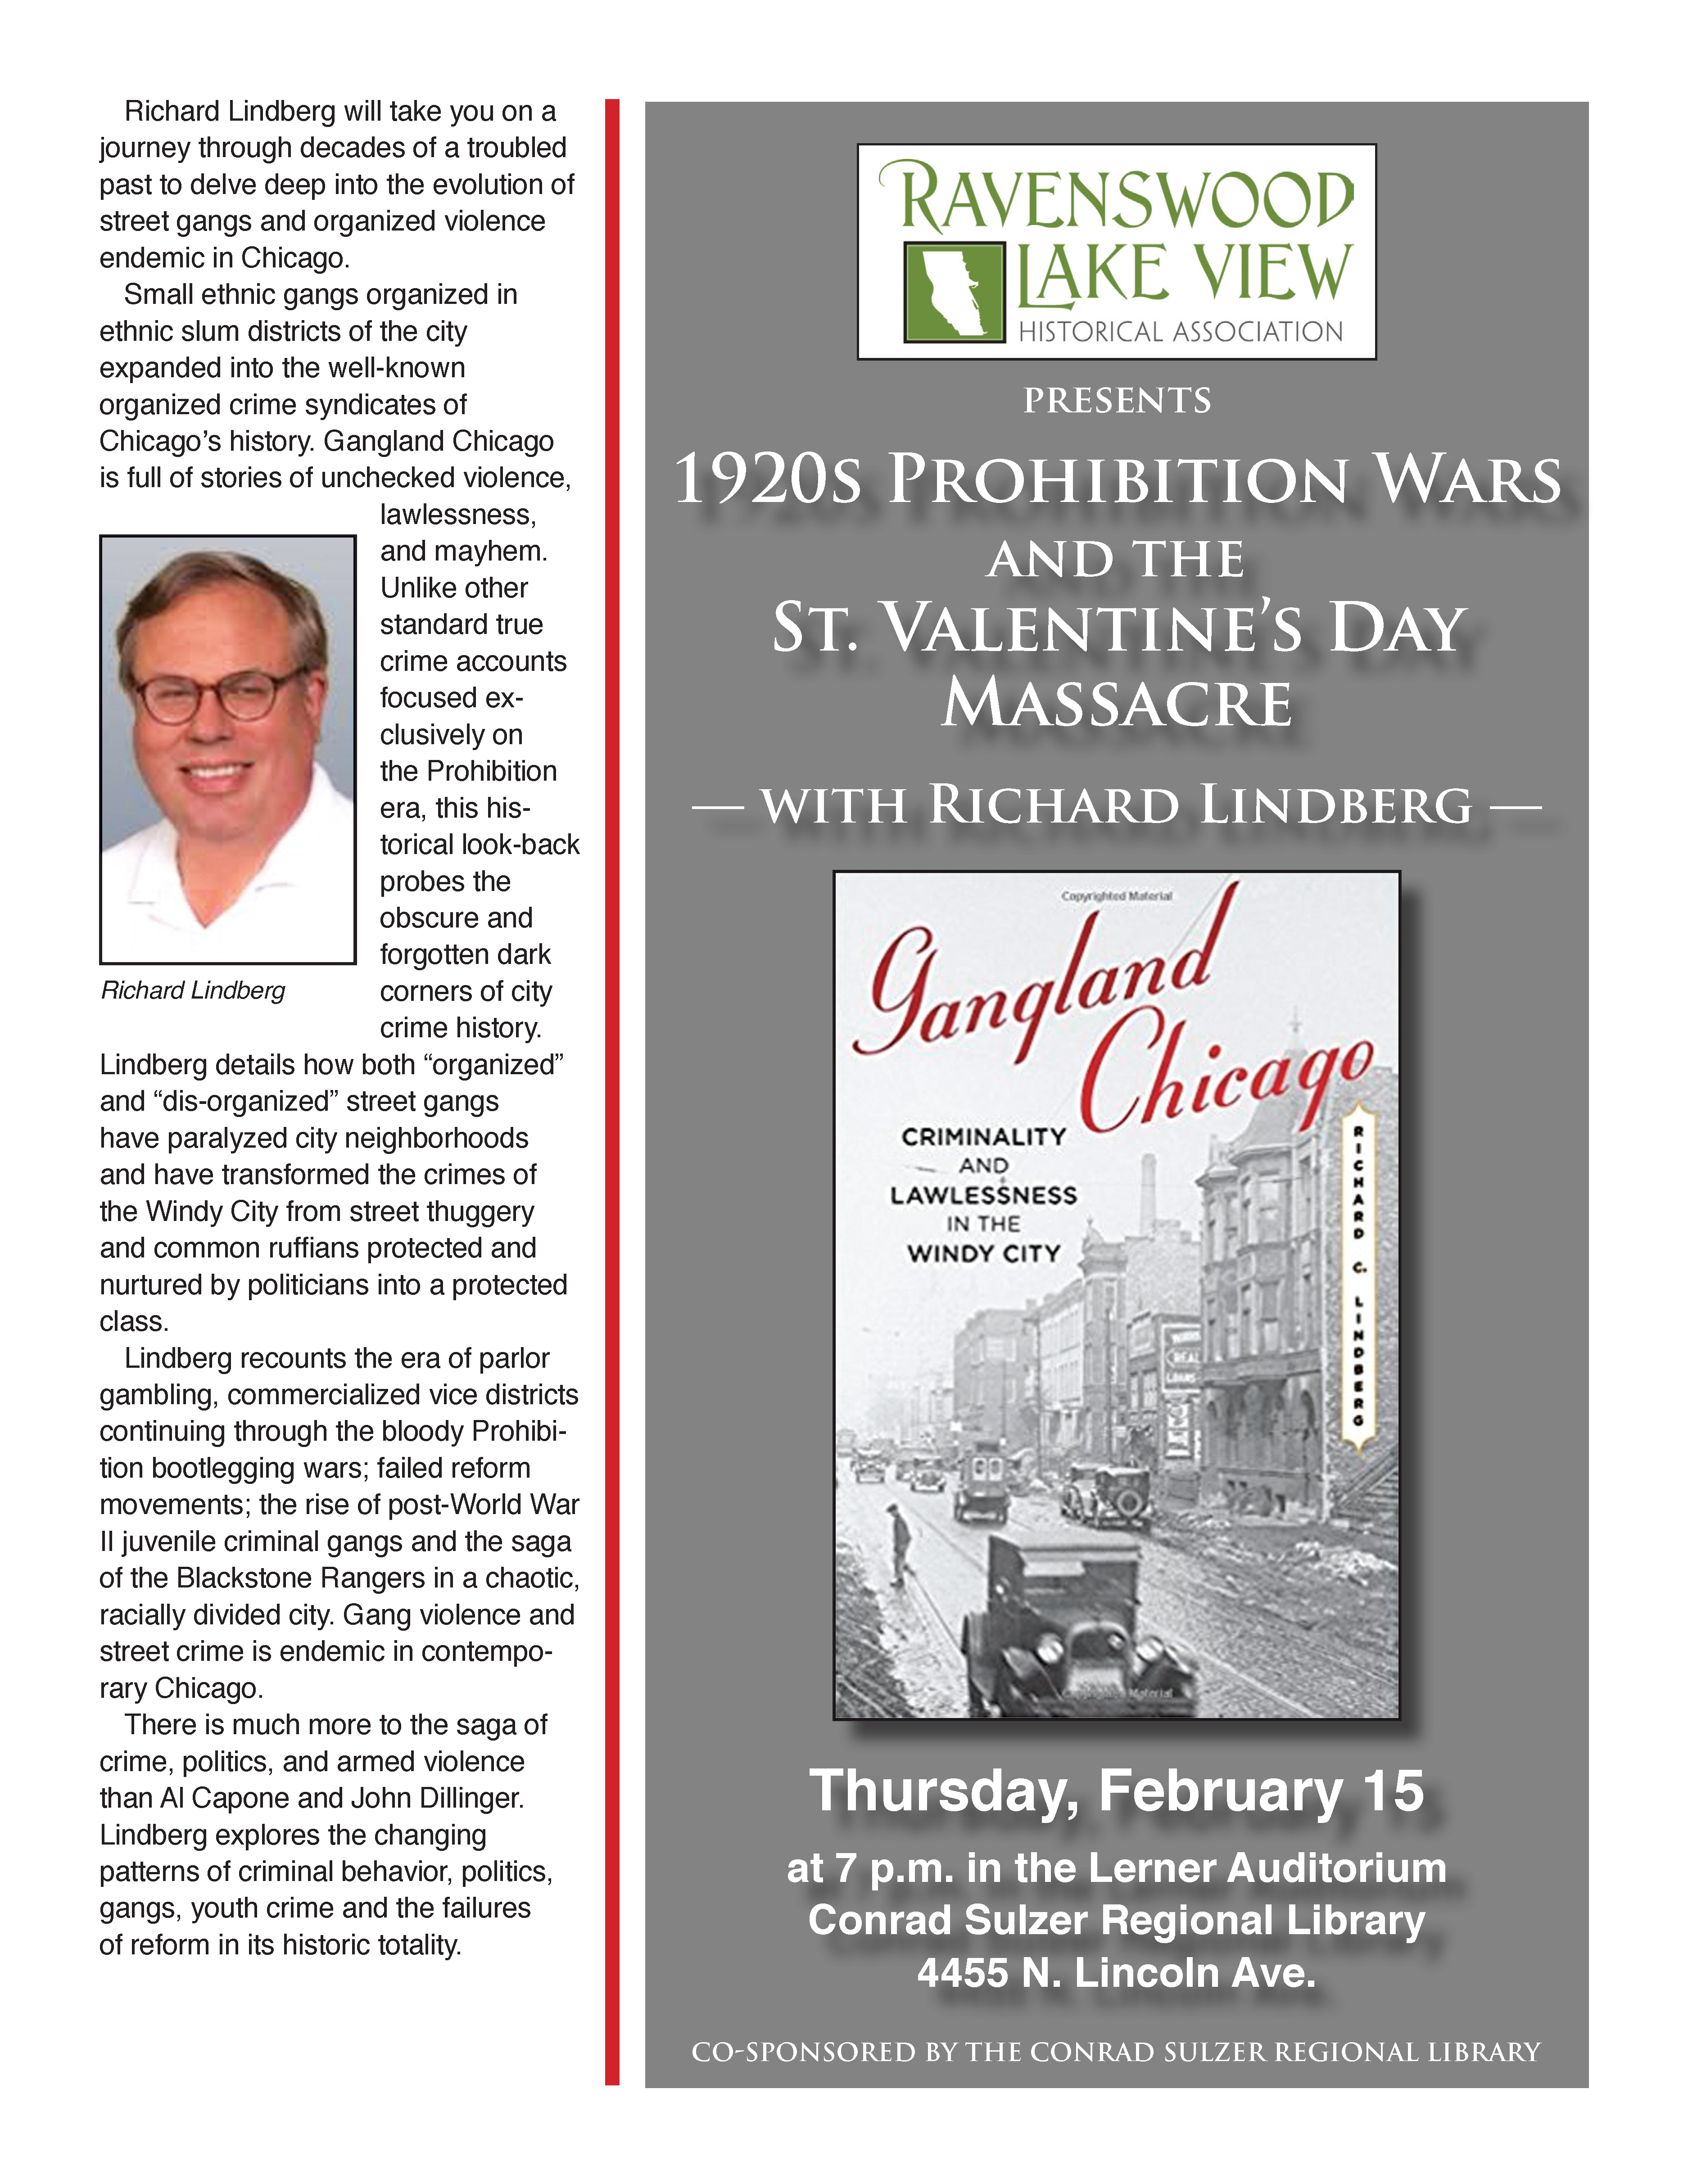 1920s Prohibition Wars and the St. Valentine's Day Massacre - Feb 15, 7pm - Lerner Auditorium, Conrad Sulzer Regional Library, 4455 N. Lincoln Ave.